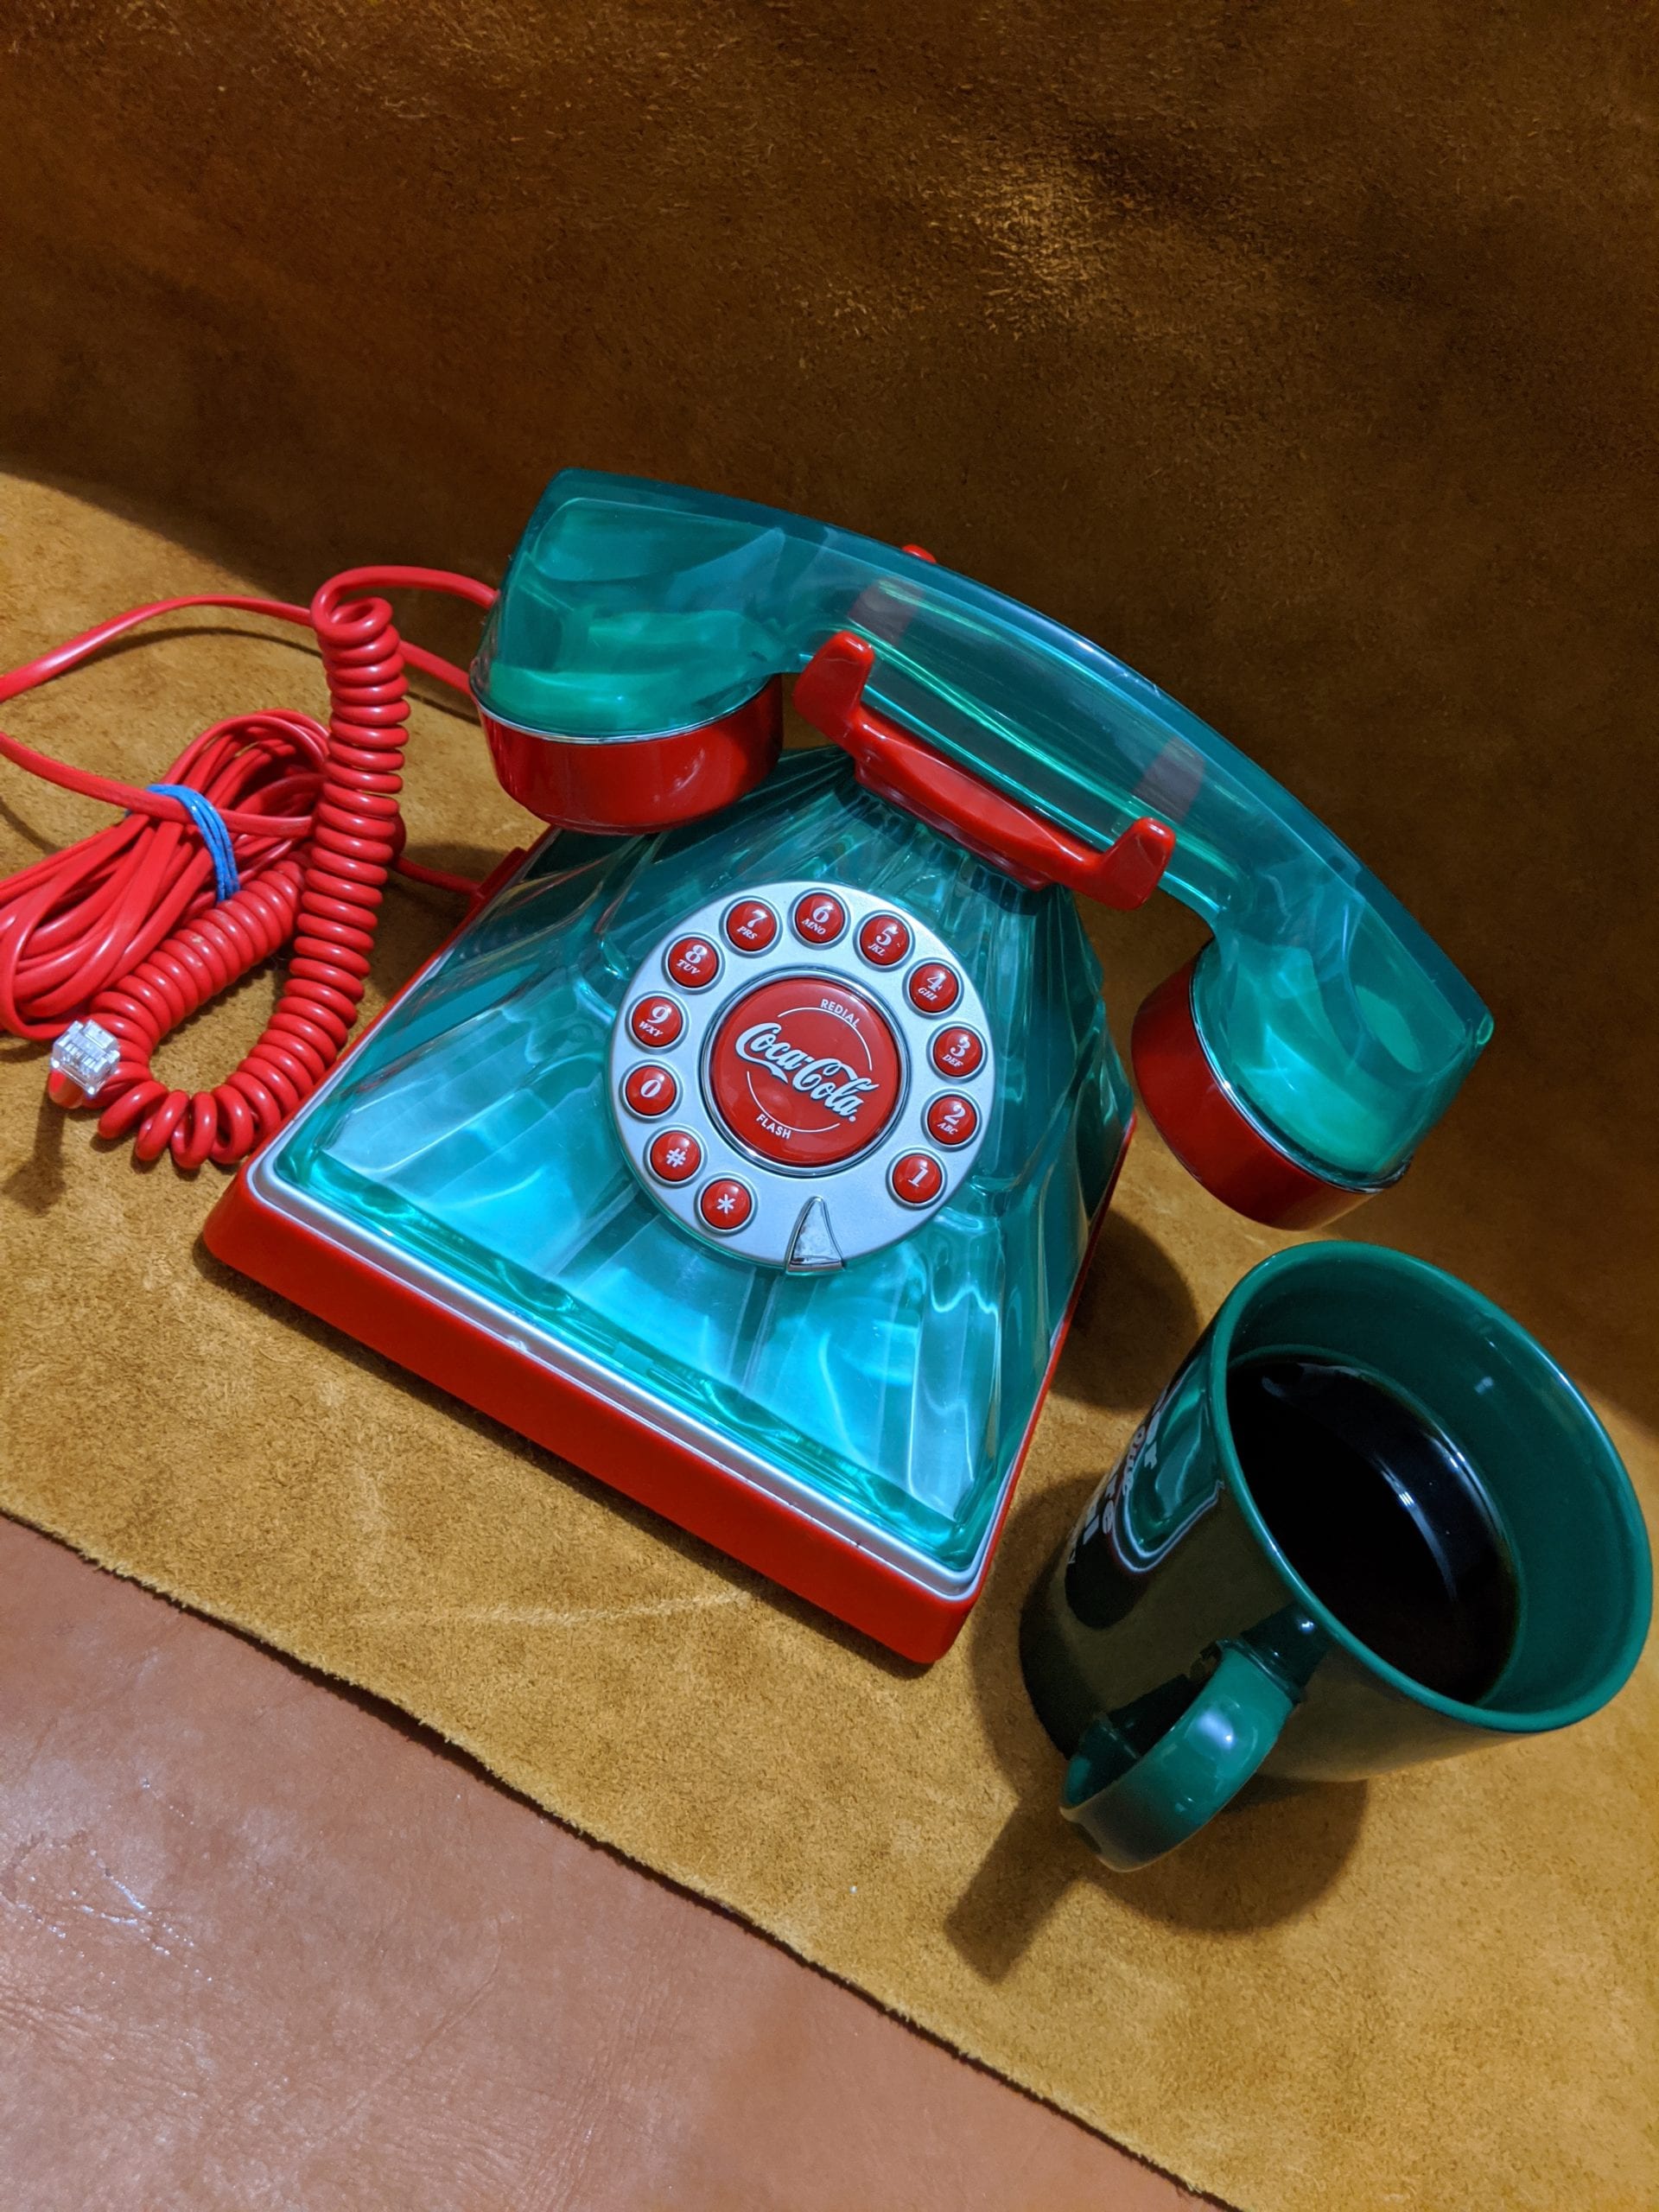 Good Morning - Enjoying Coffee & Telephones at The Telephone Museum ☕☕☕☕☎☎☎☎☕☕☕☕☎☎☎☎